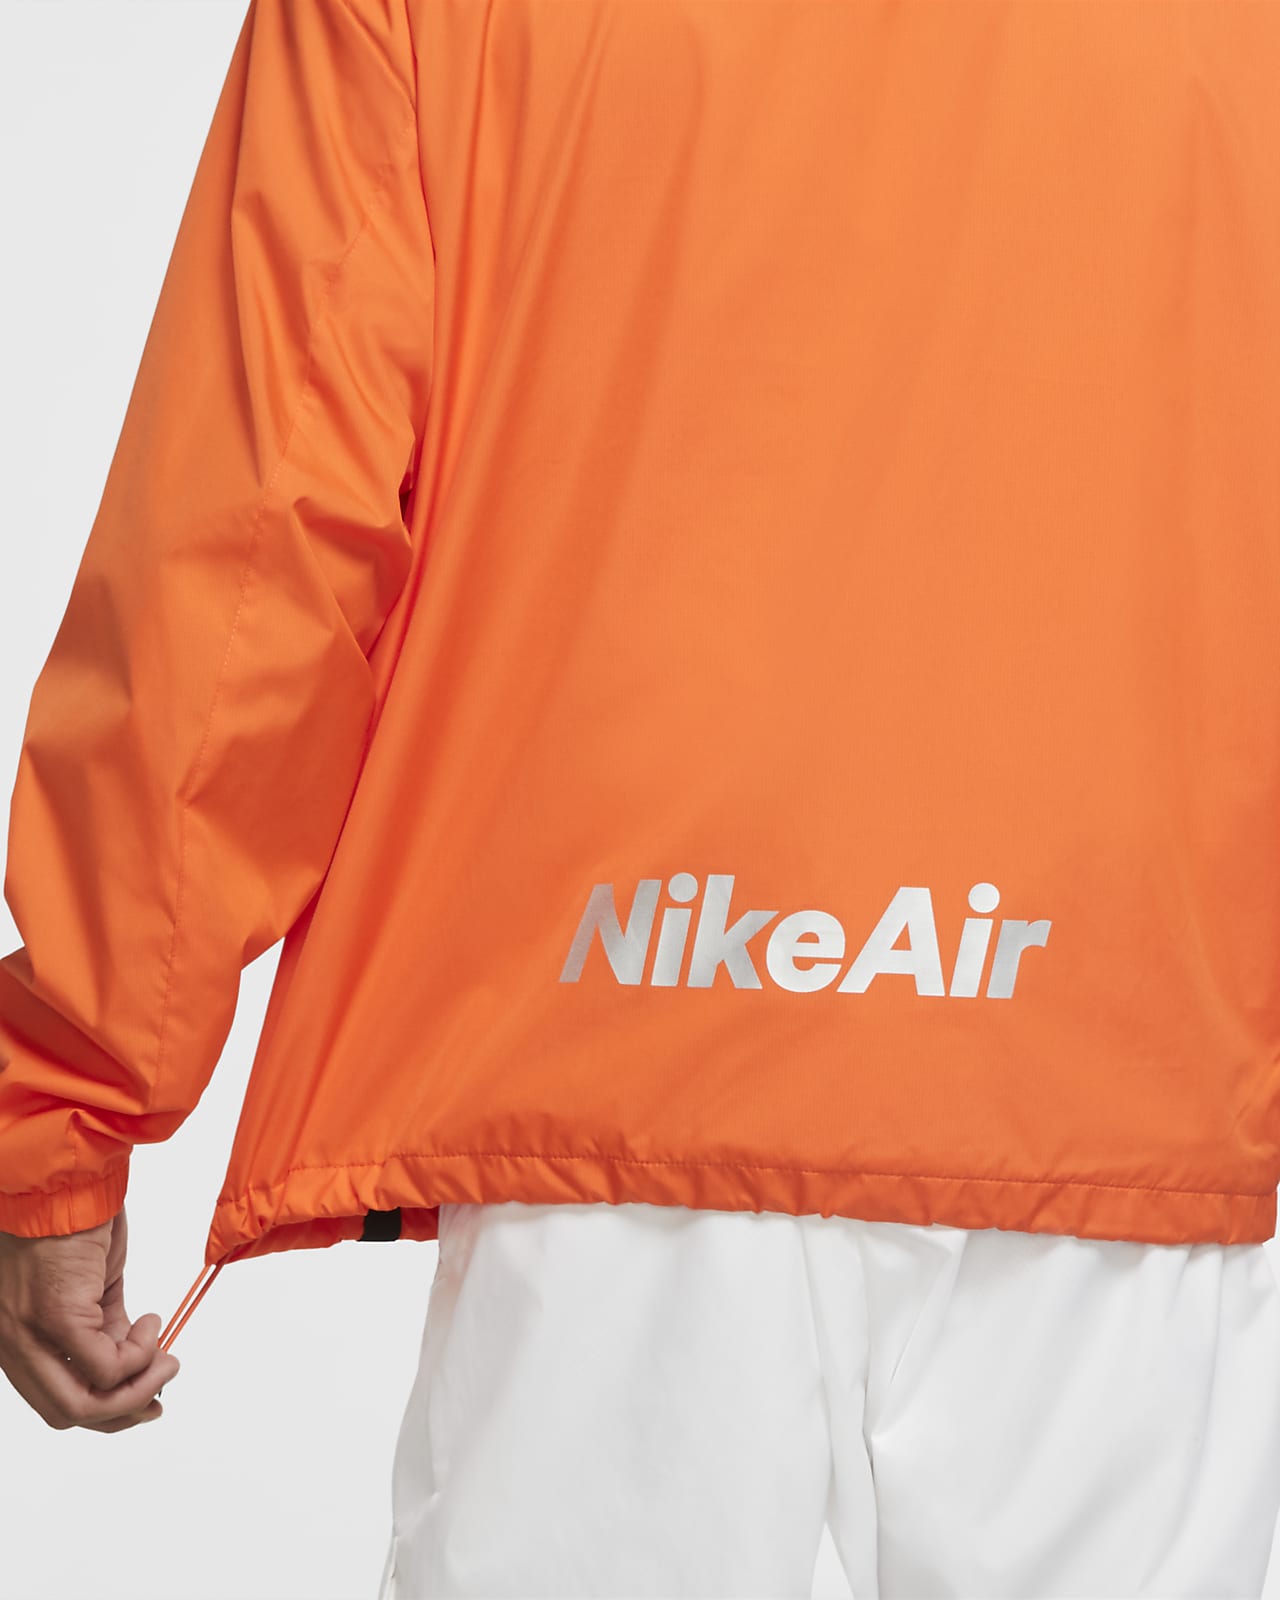 Nike Air Nike.com